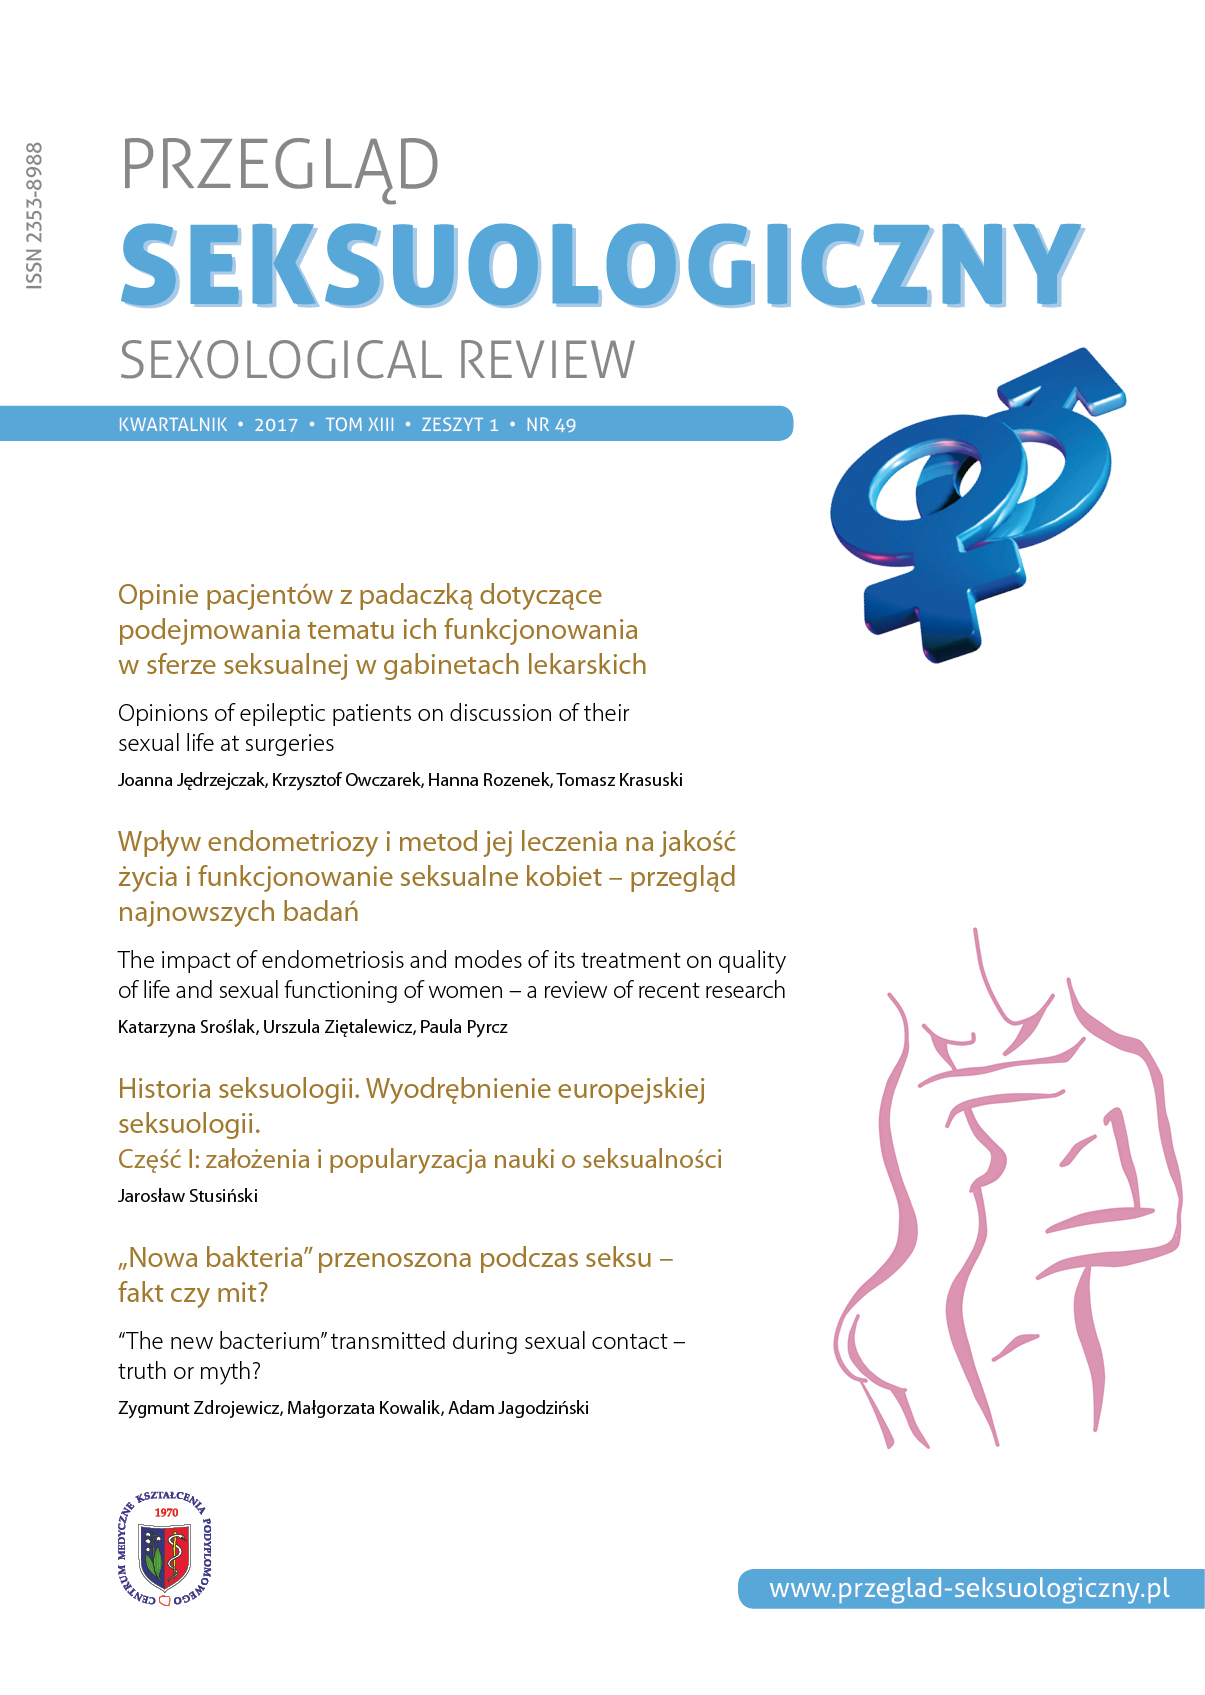 History of sexology. The emergence of European sexology. Cover Image